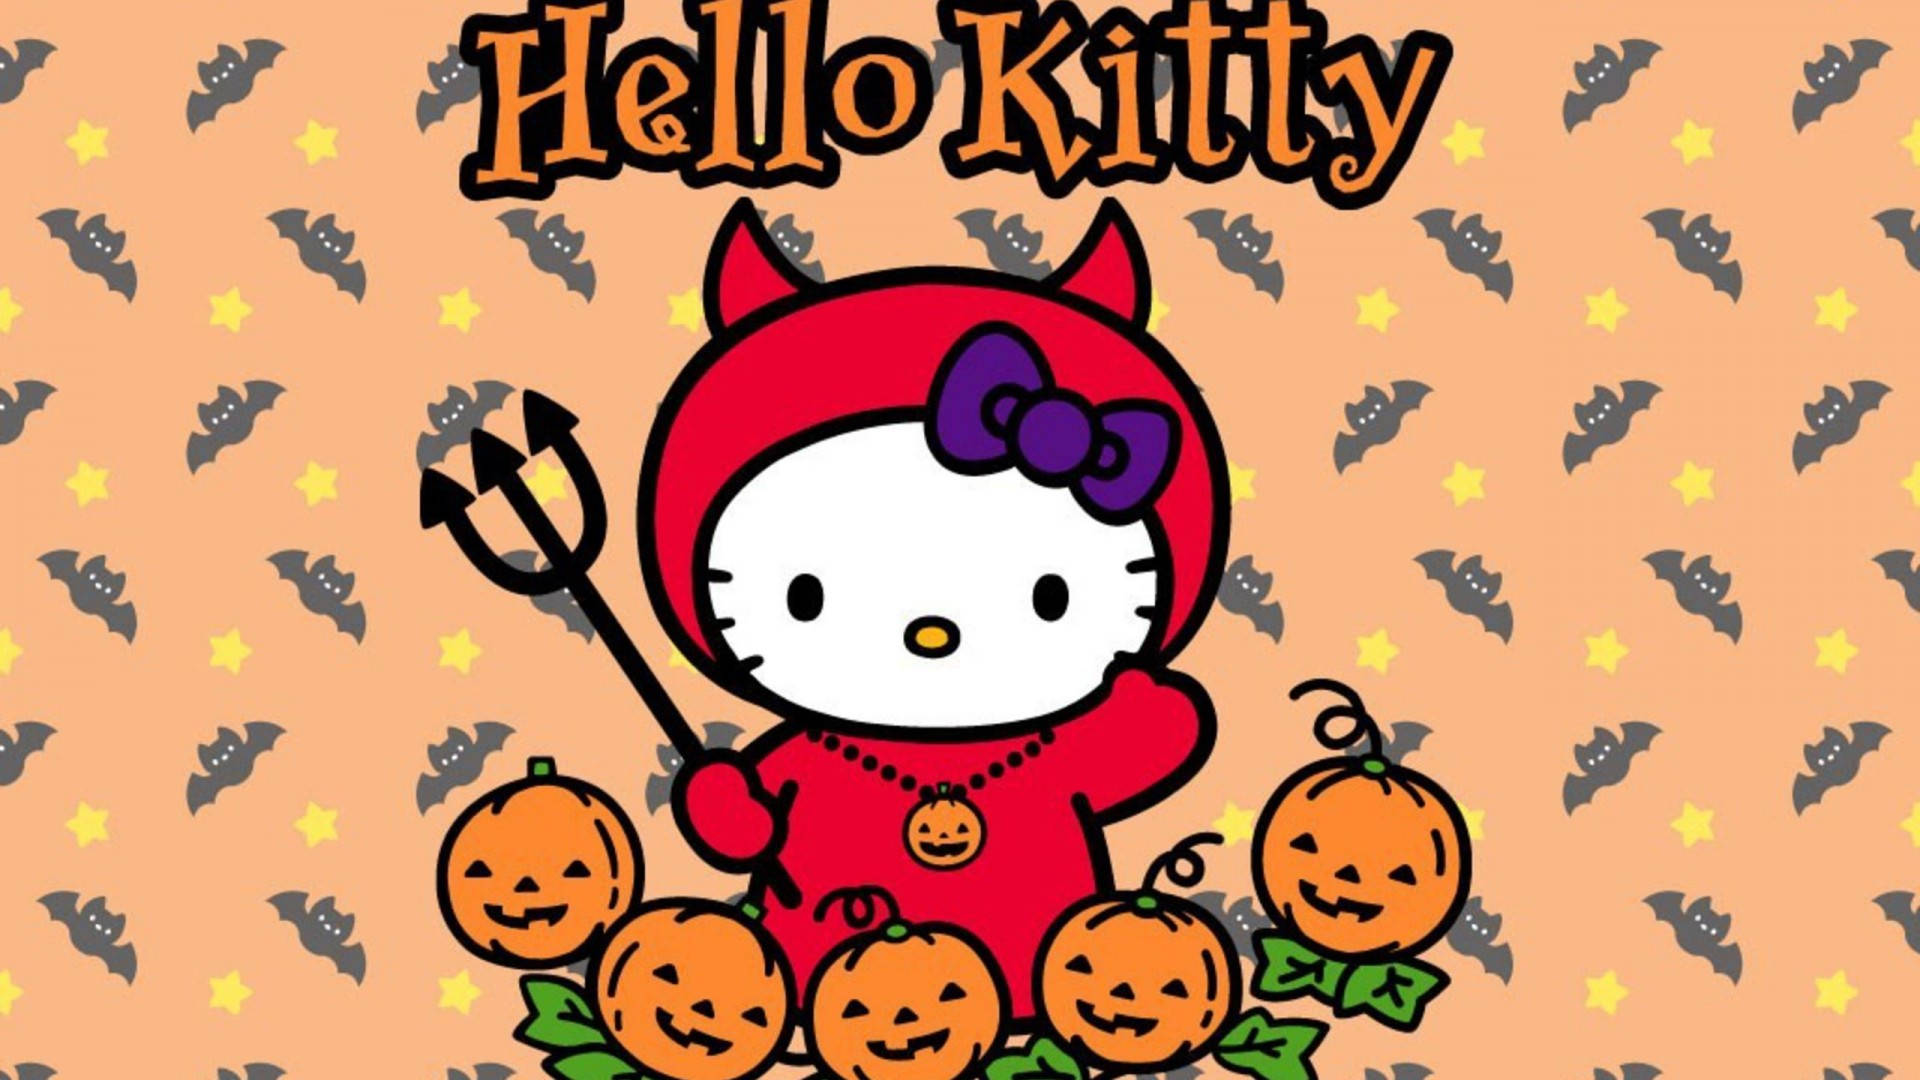 Free Hello Kitty Halloween Wallpaper Downloads, Hello Kitty Halloween Wallpaper for FREE